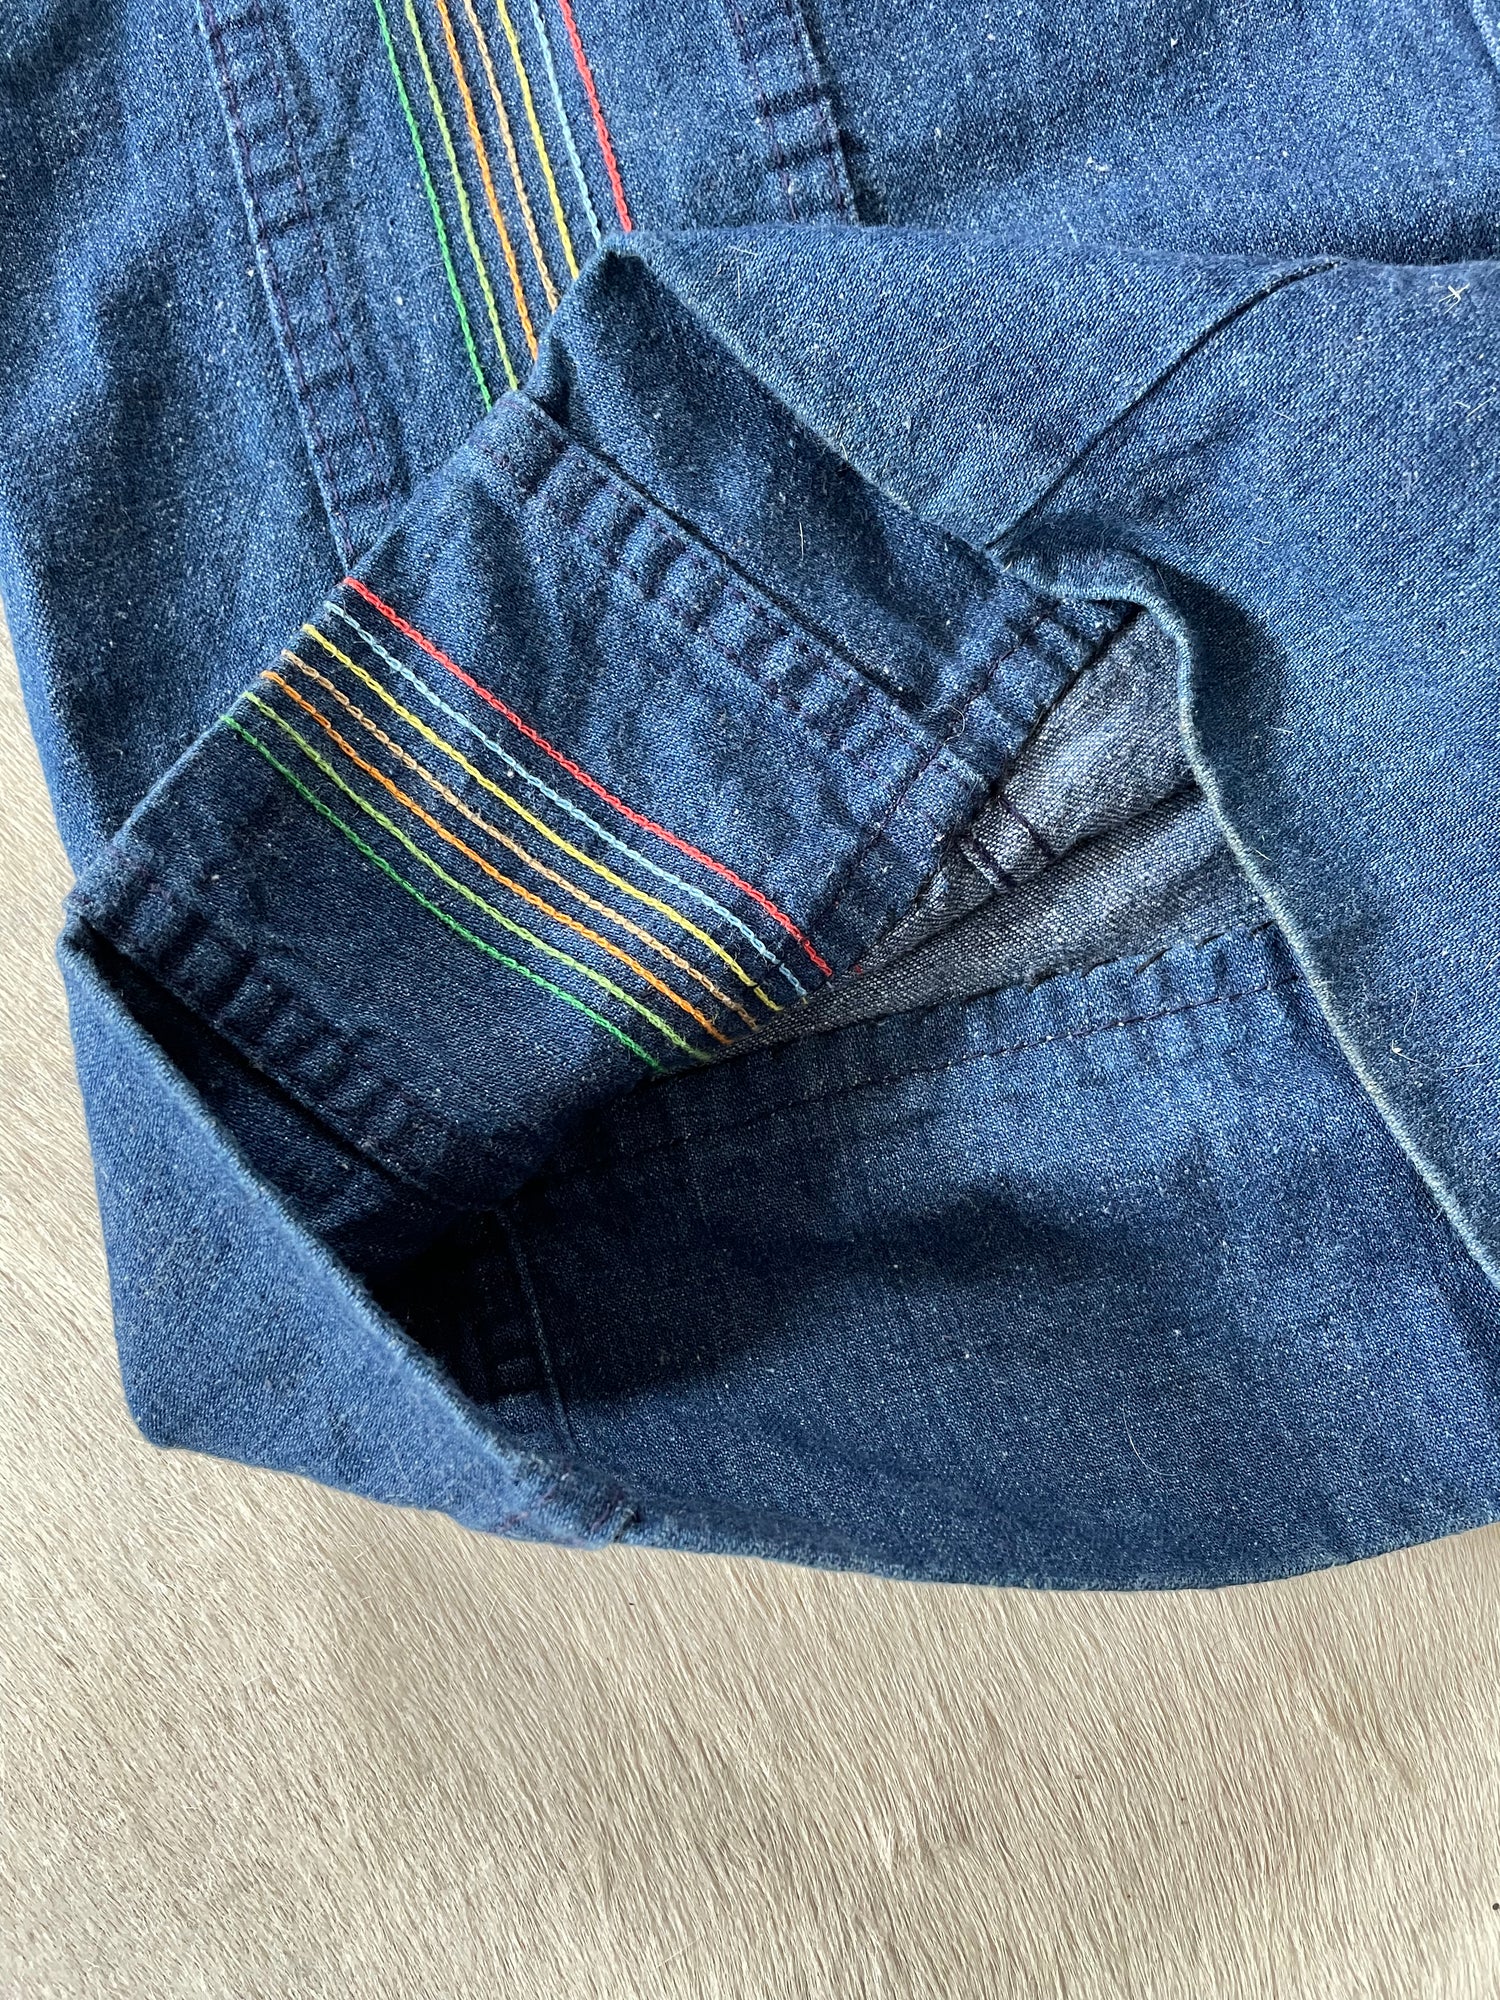 1970s La Disco bell bottom blue jeans pants rainbow pocket – Hemlock  Vintage Clothing